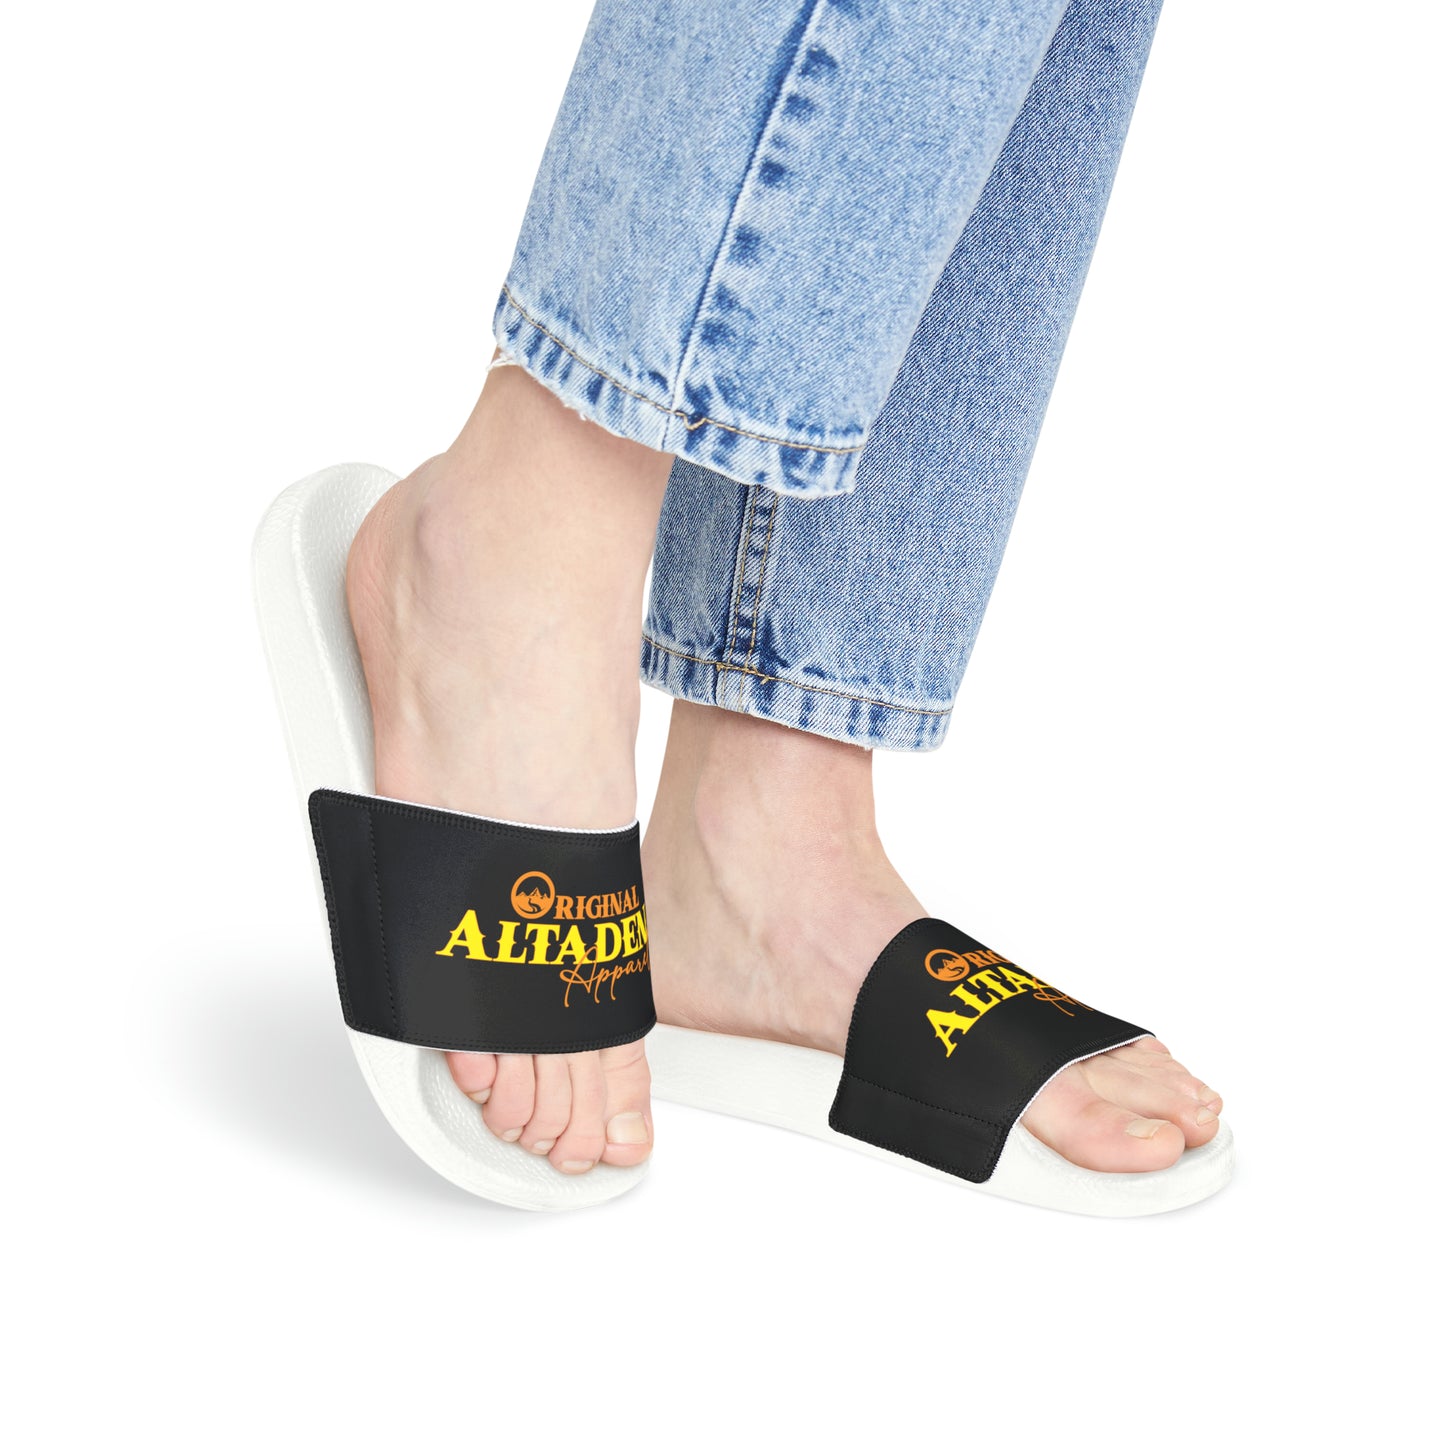 Original Altadena Apparel  Women's PU Slide Sandals